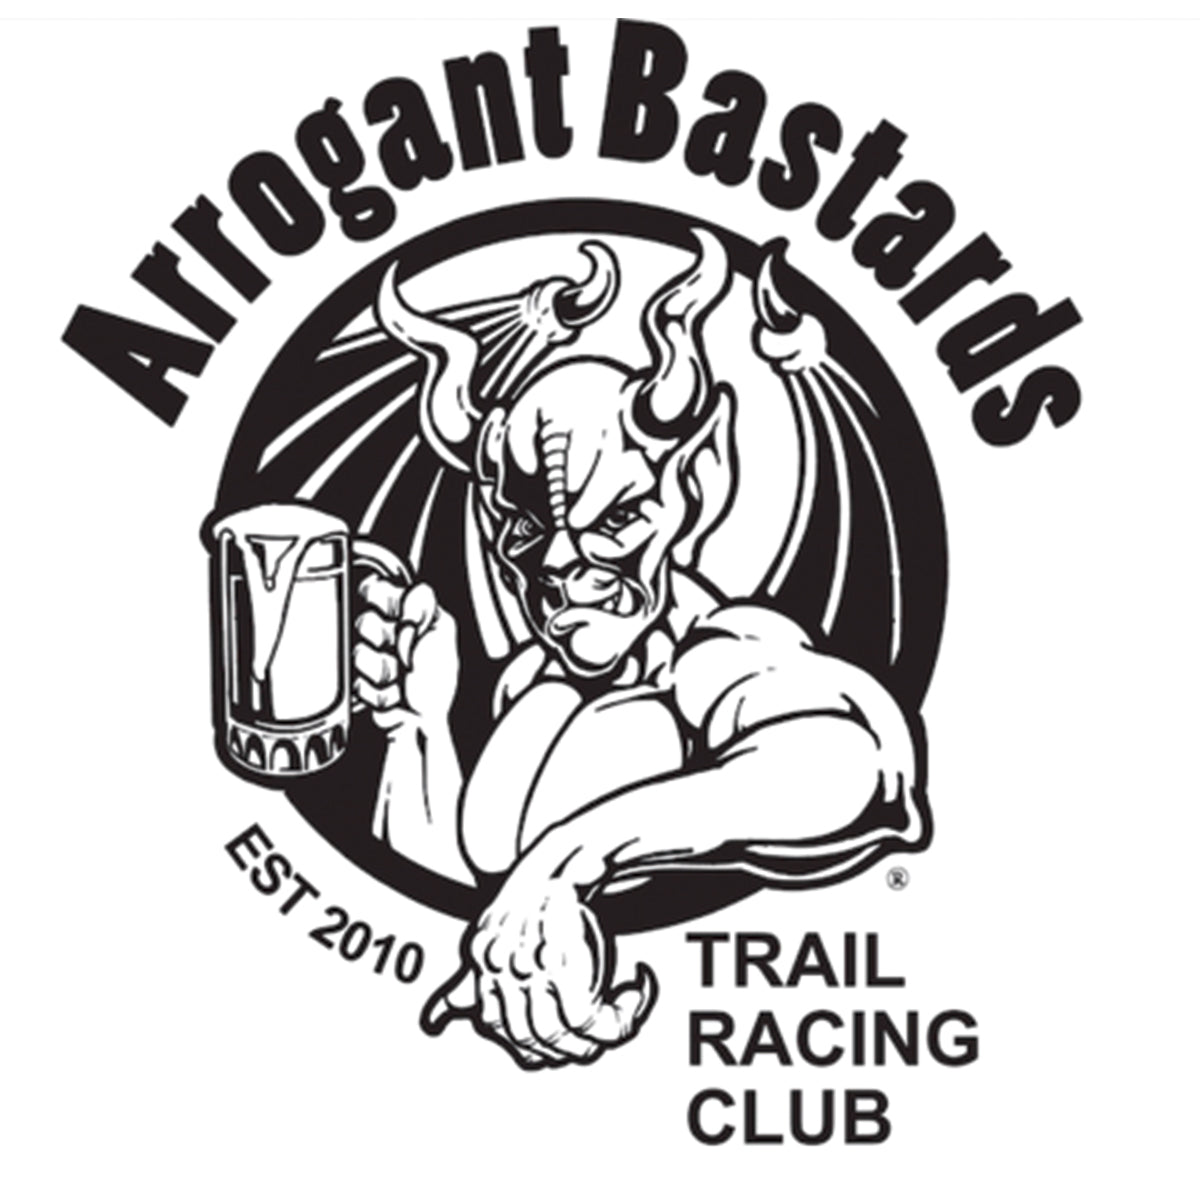 Arrogant Bastards Trail Racing Club